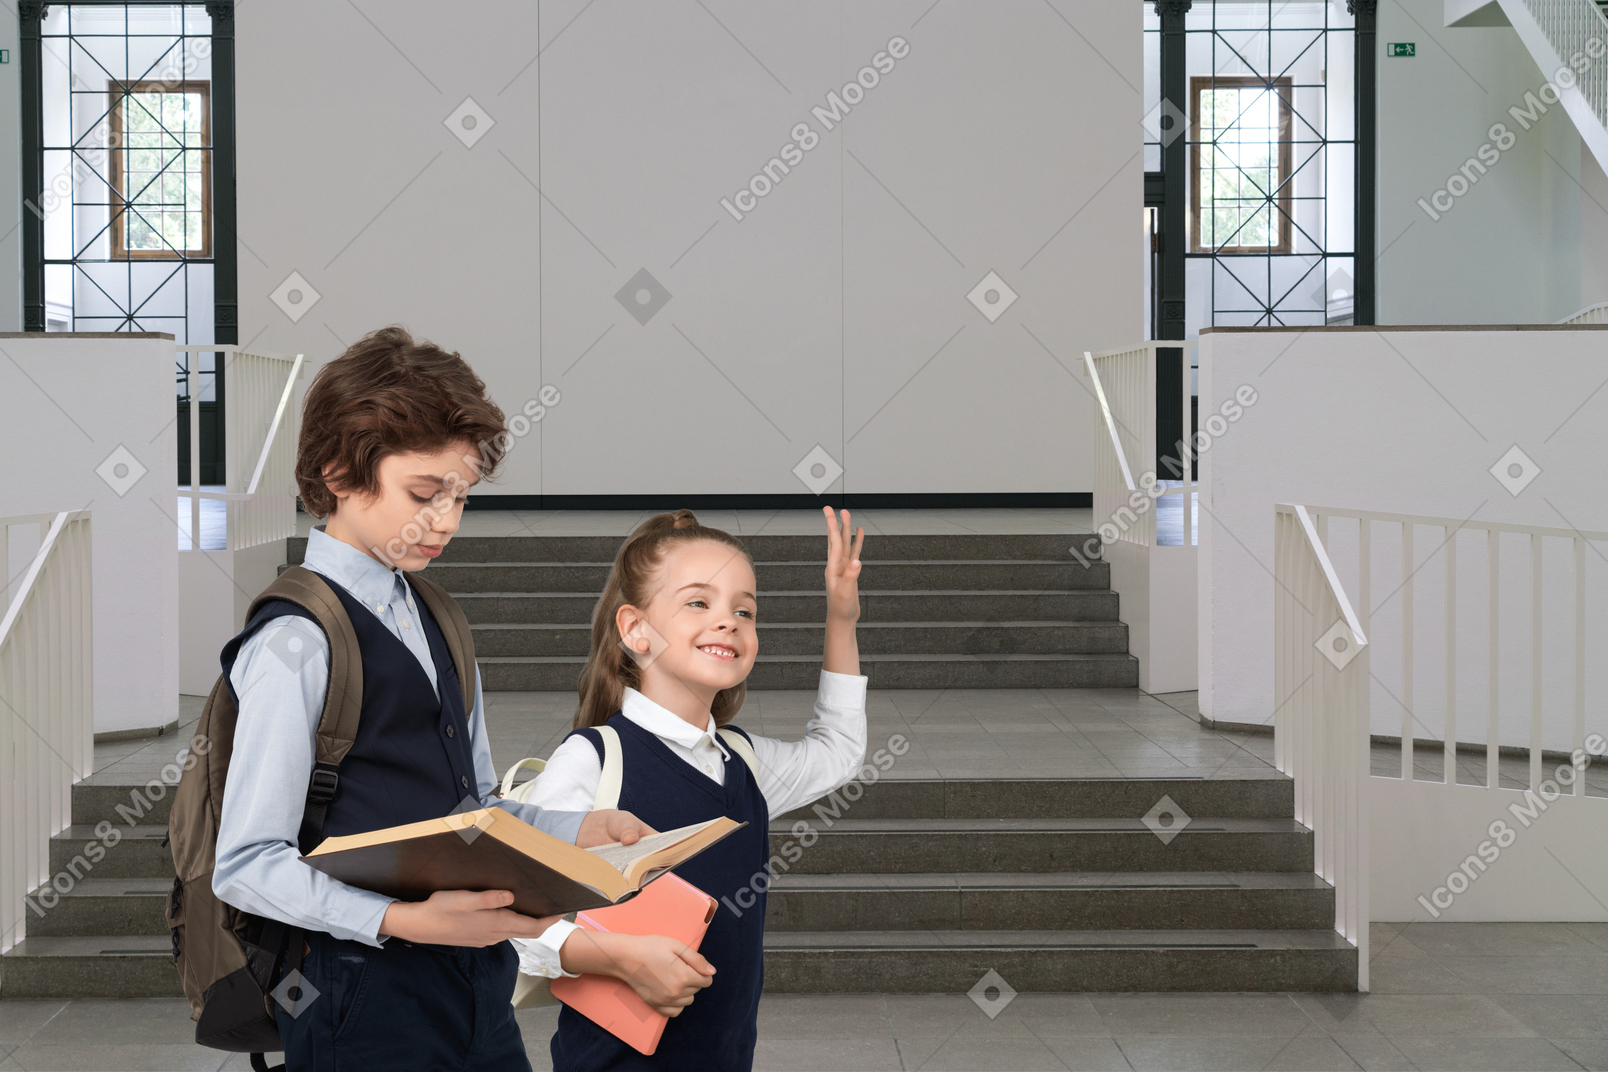 Schoolboy and schoolgirl standing in front of stairs